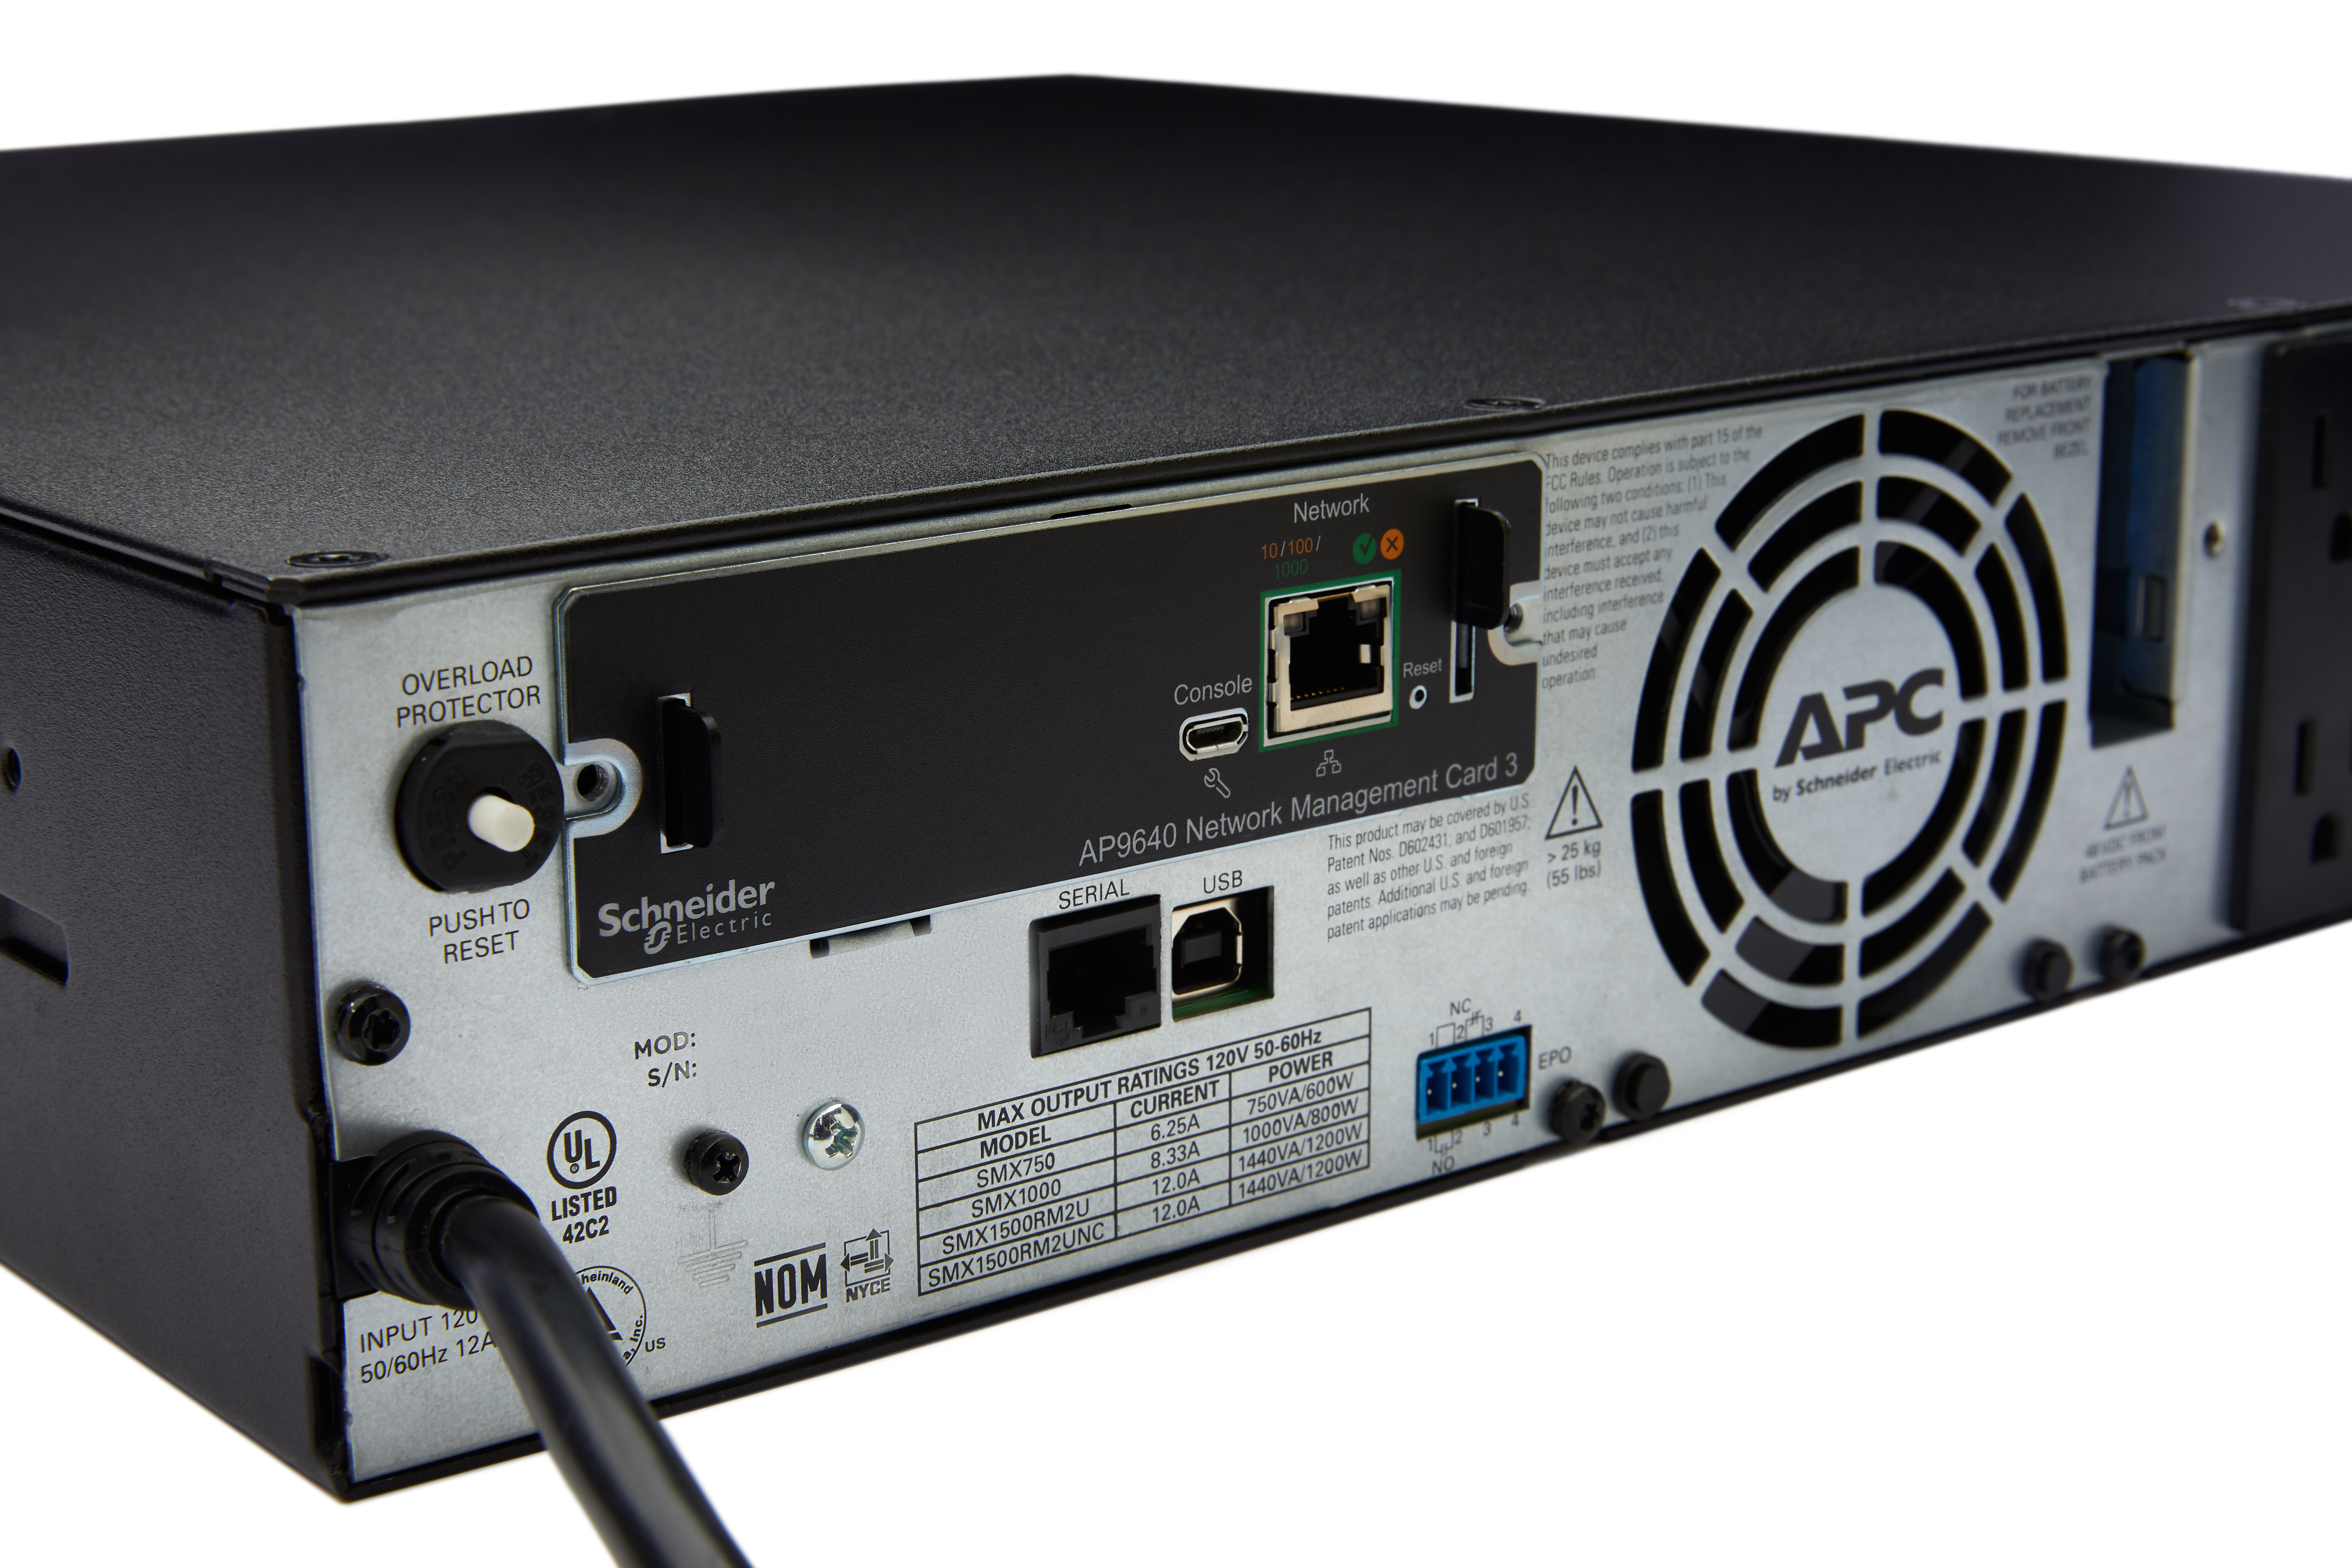 APC USV-Netzwerkmanagementkarte 3  # AP9640